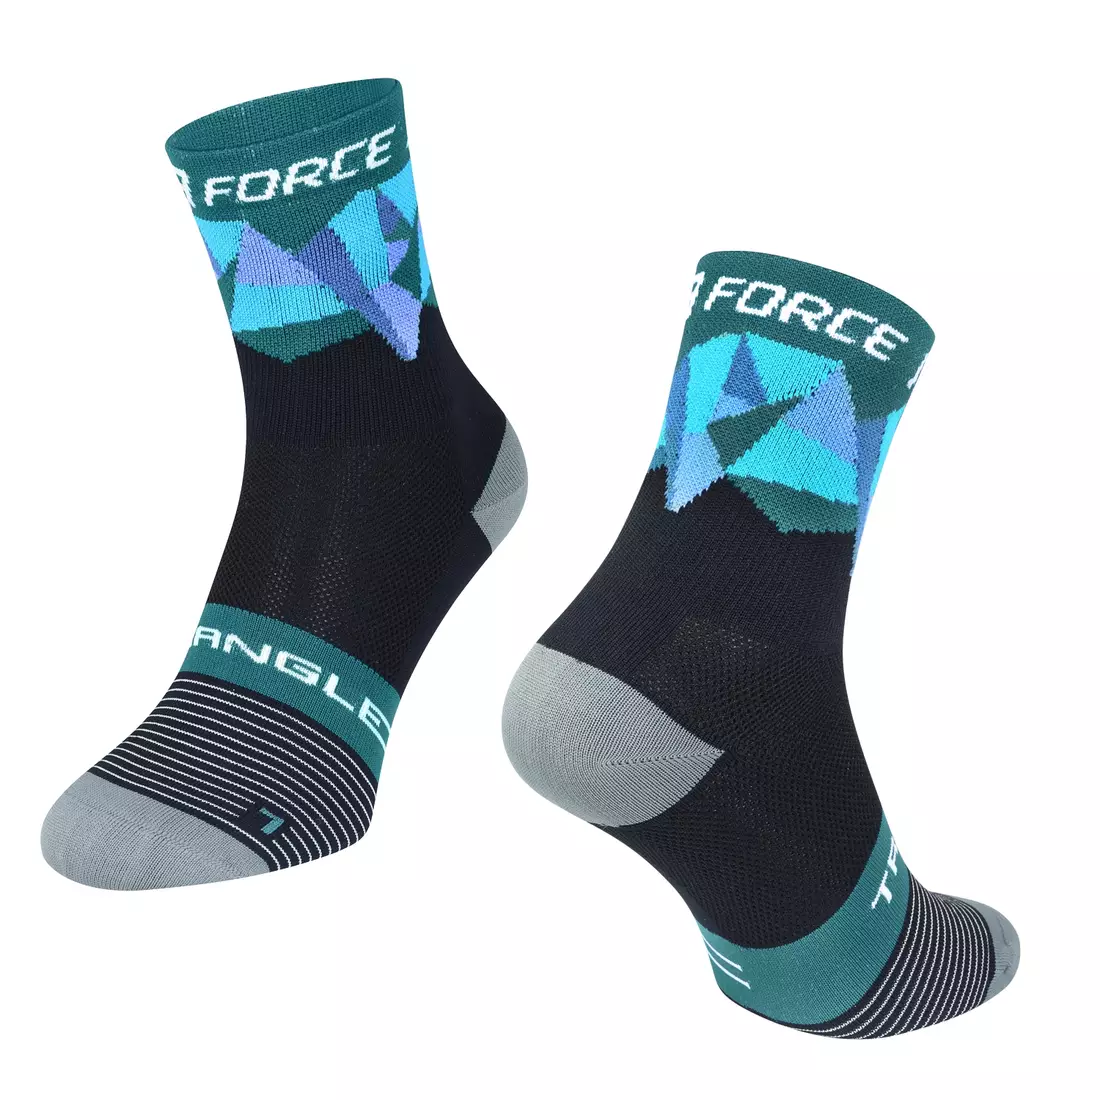 FORCE TRIANGLE cycling/sports socks, black-blue-green